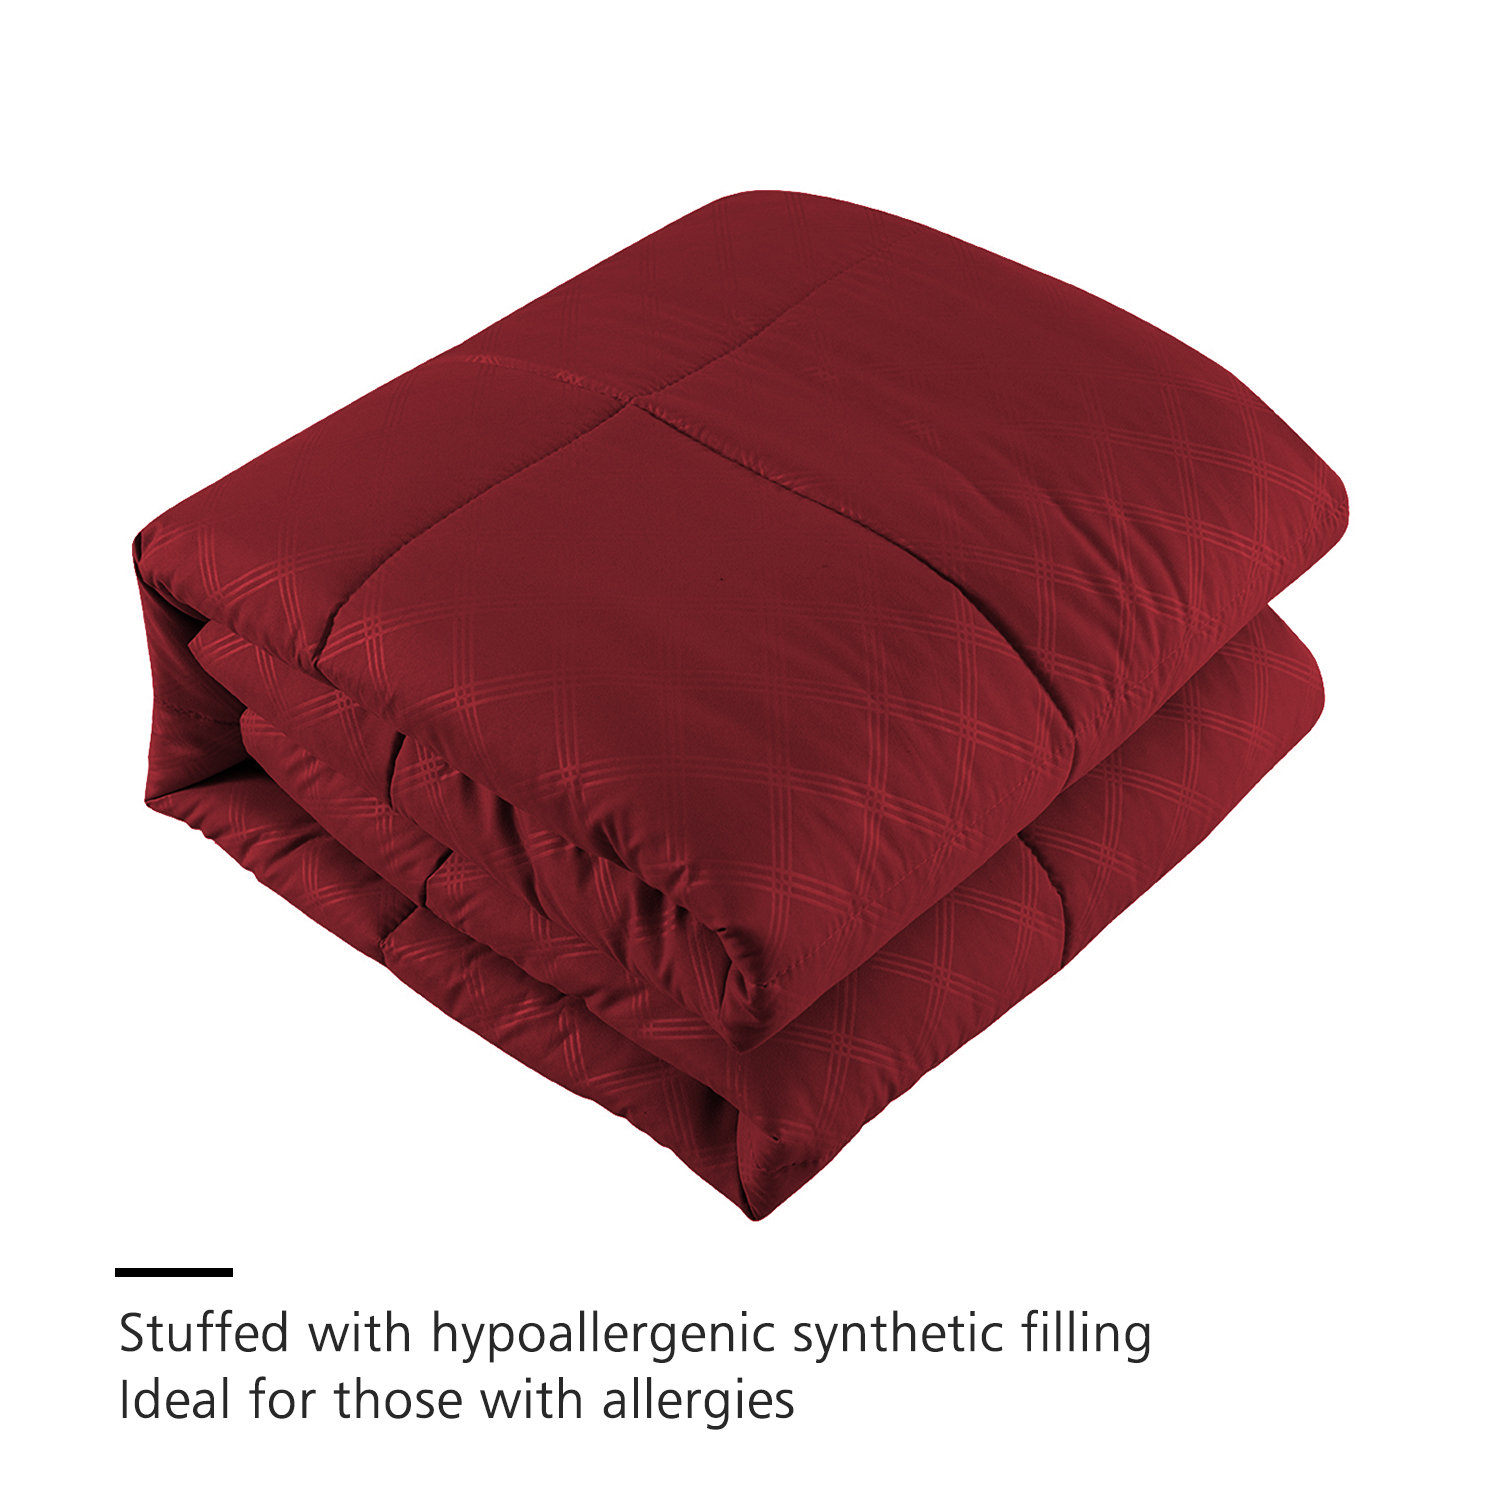 JML 8-10 Pieces Comforter Set,Soft Micorfiber Plaid Pattern Bed In A Bag Bedding Set